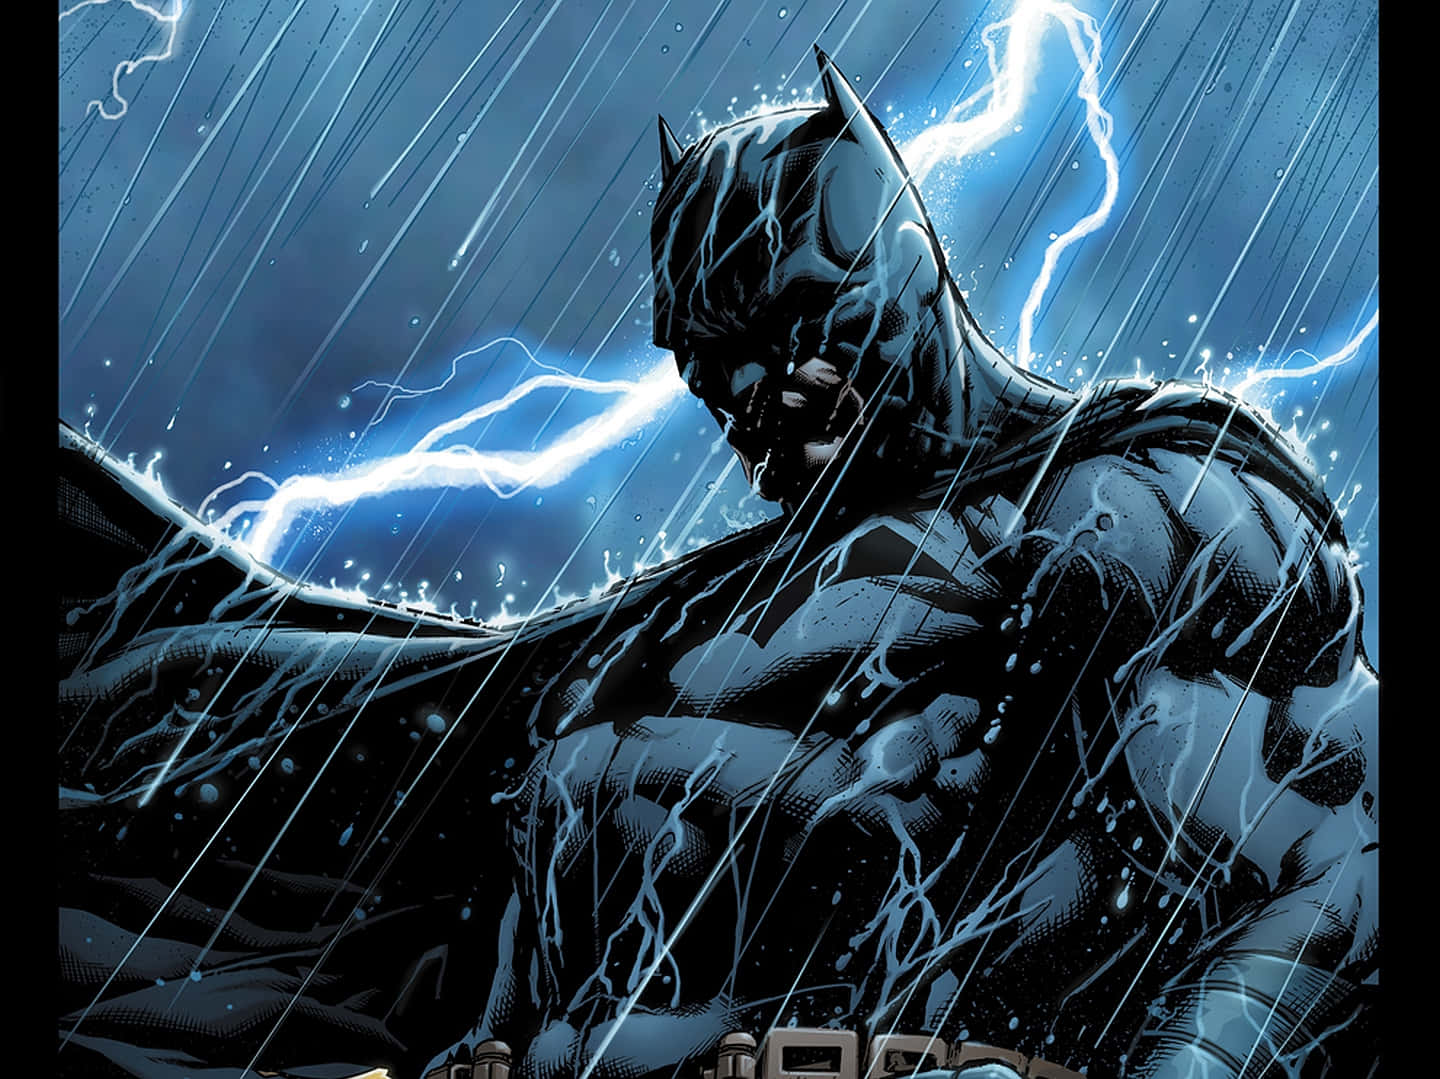 Batman In The Rain With Lightning